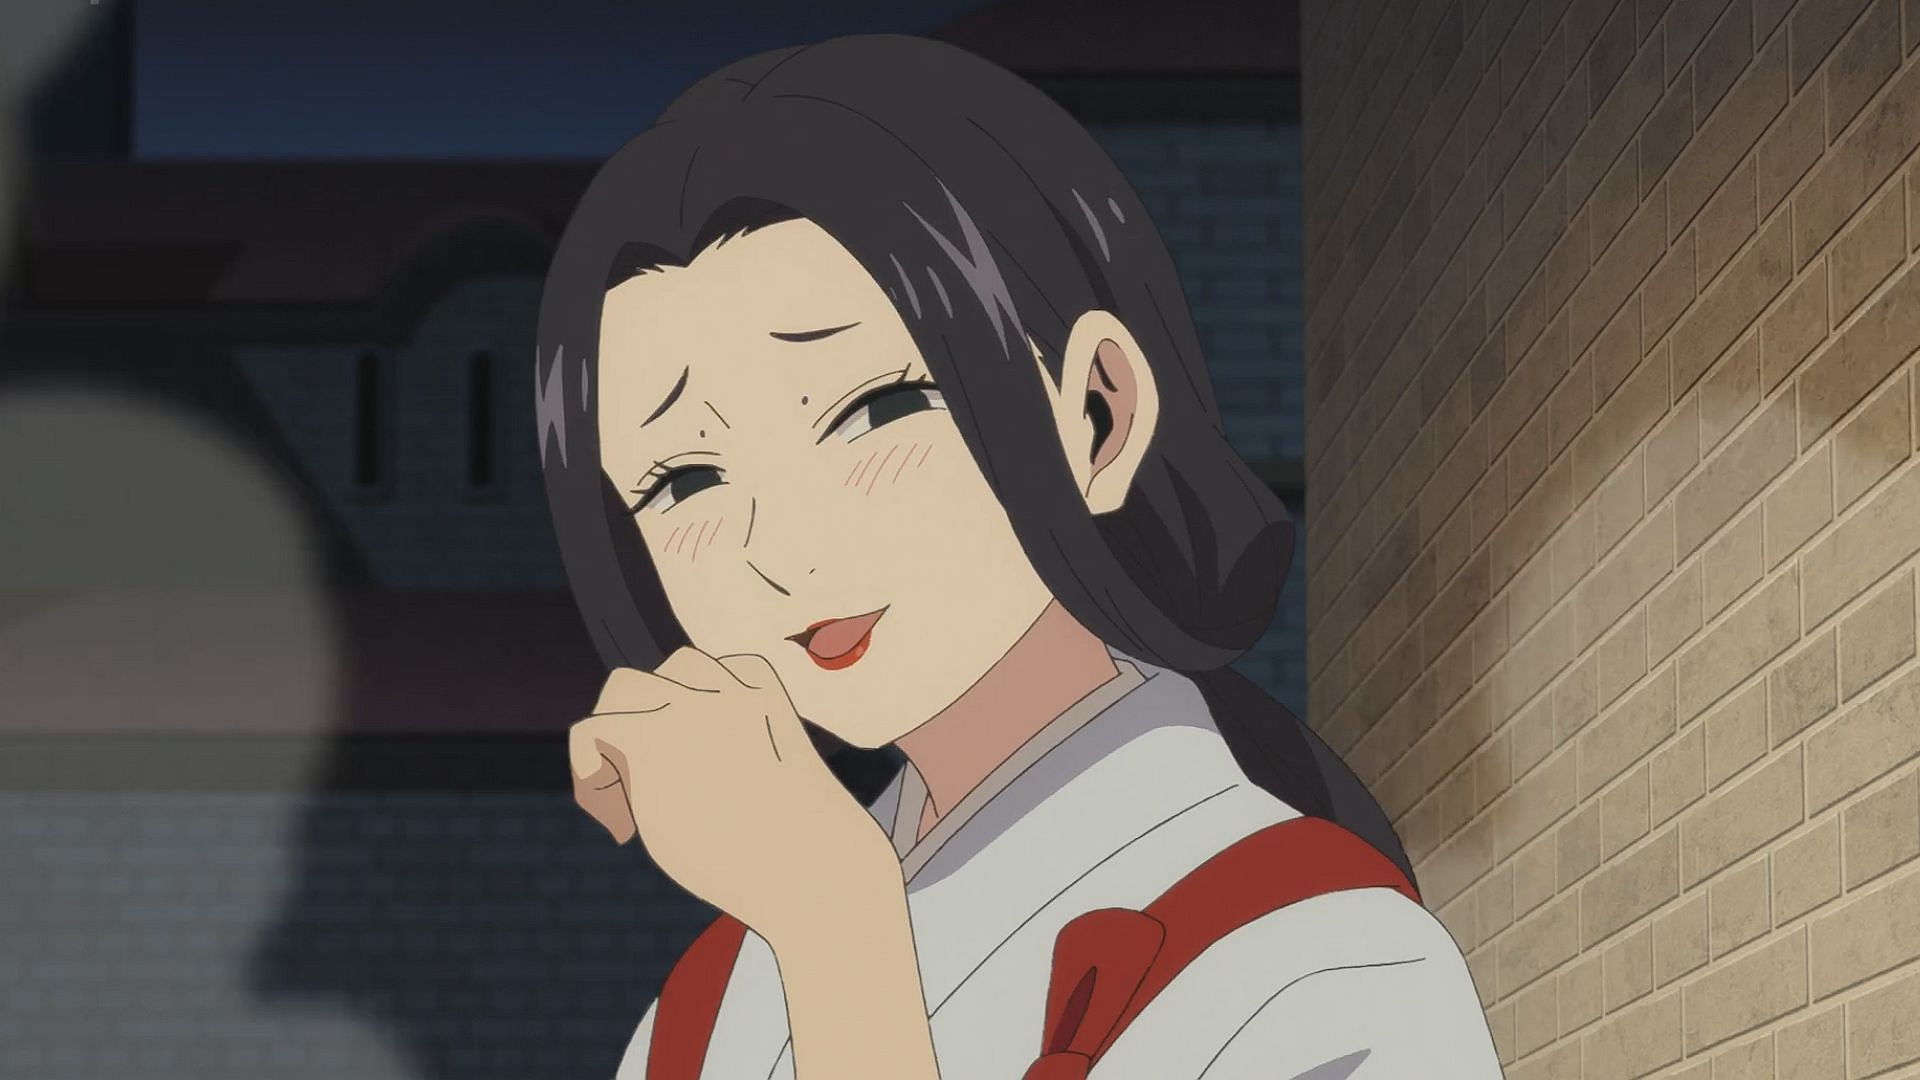 Maizuru as shown in the anime (Image via Studio Trigger)